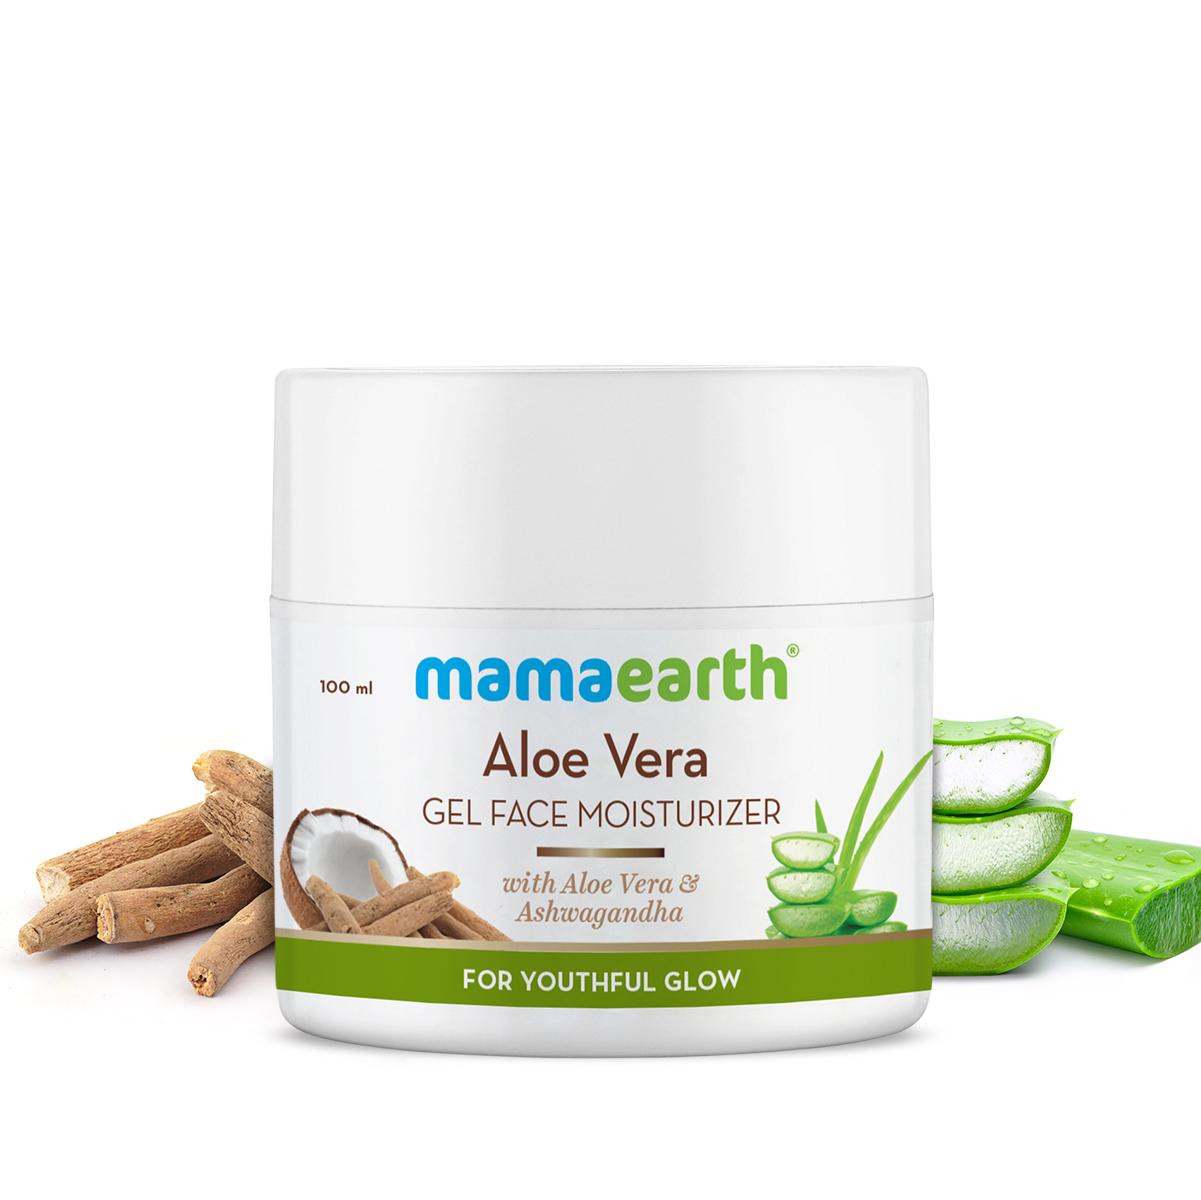 aloe vera gel moisturizer with aloe vera & ashwagandha for a youthful glow - 100 g